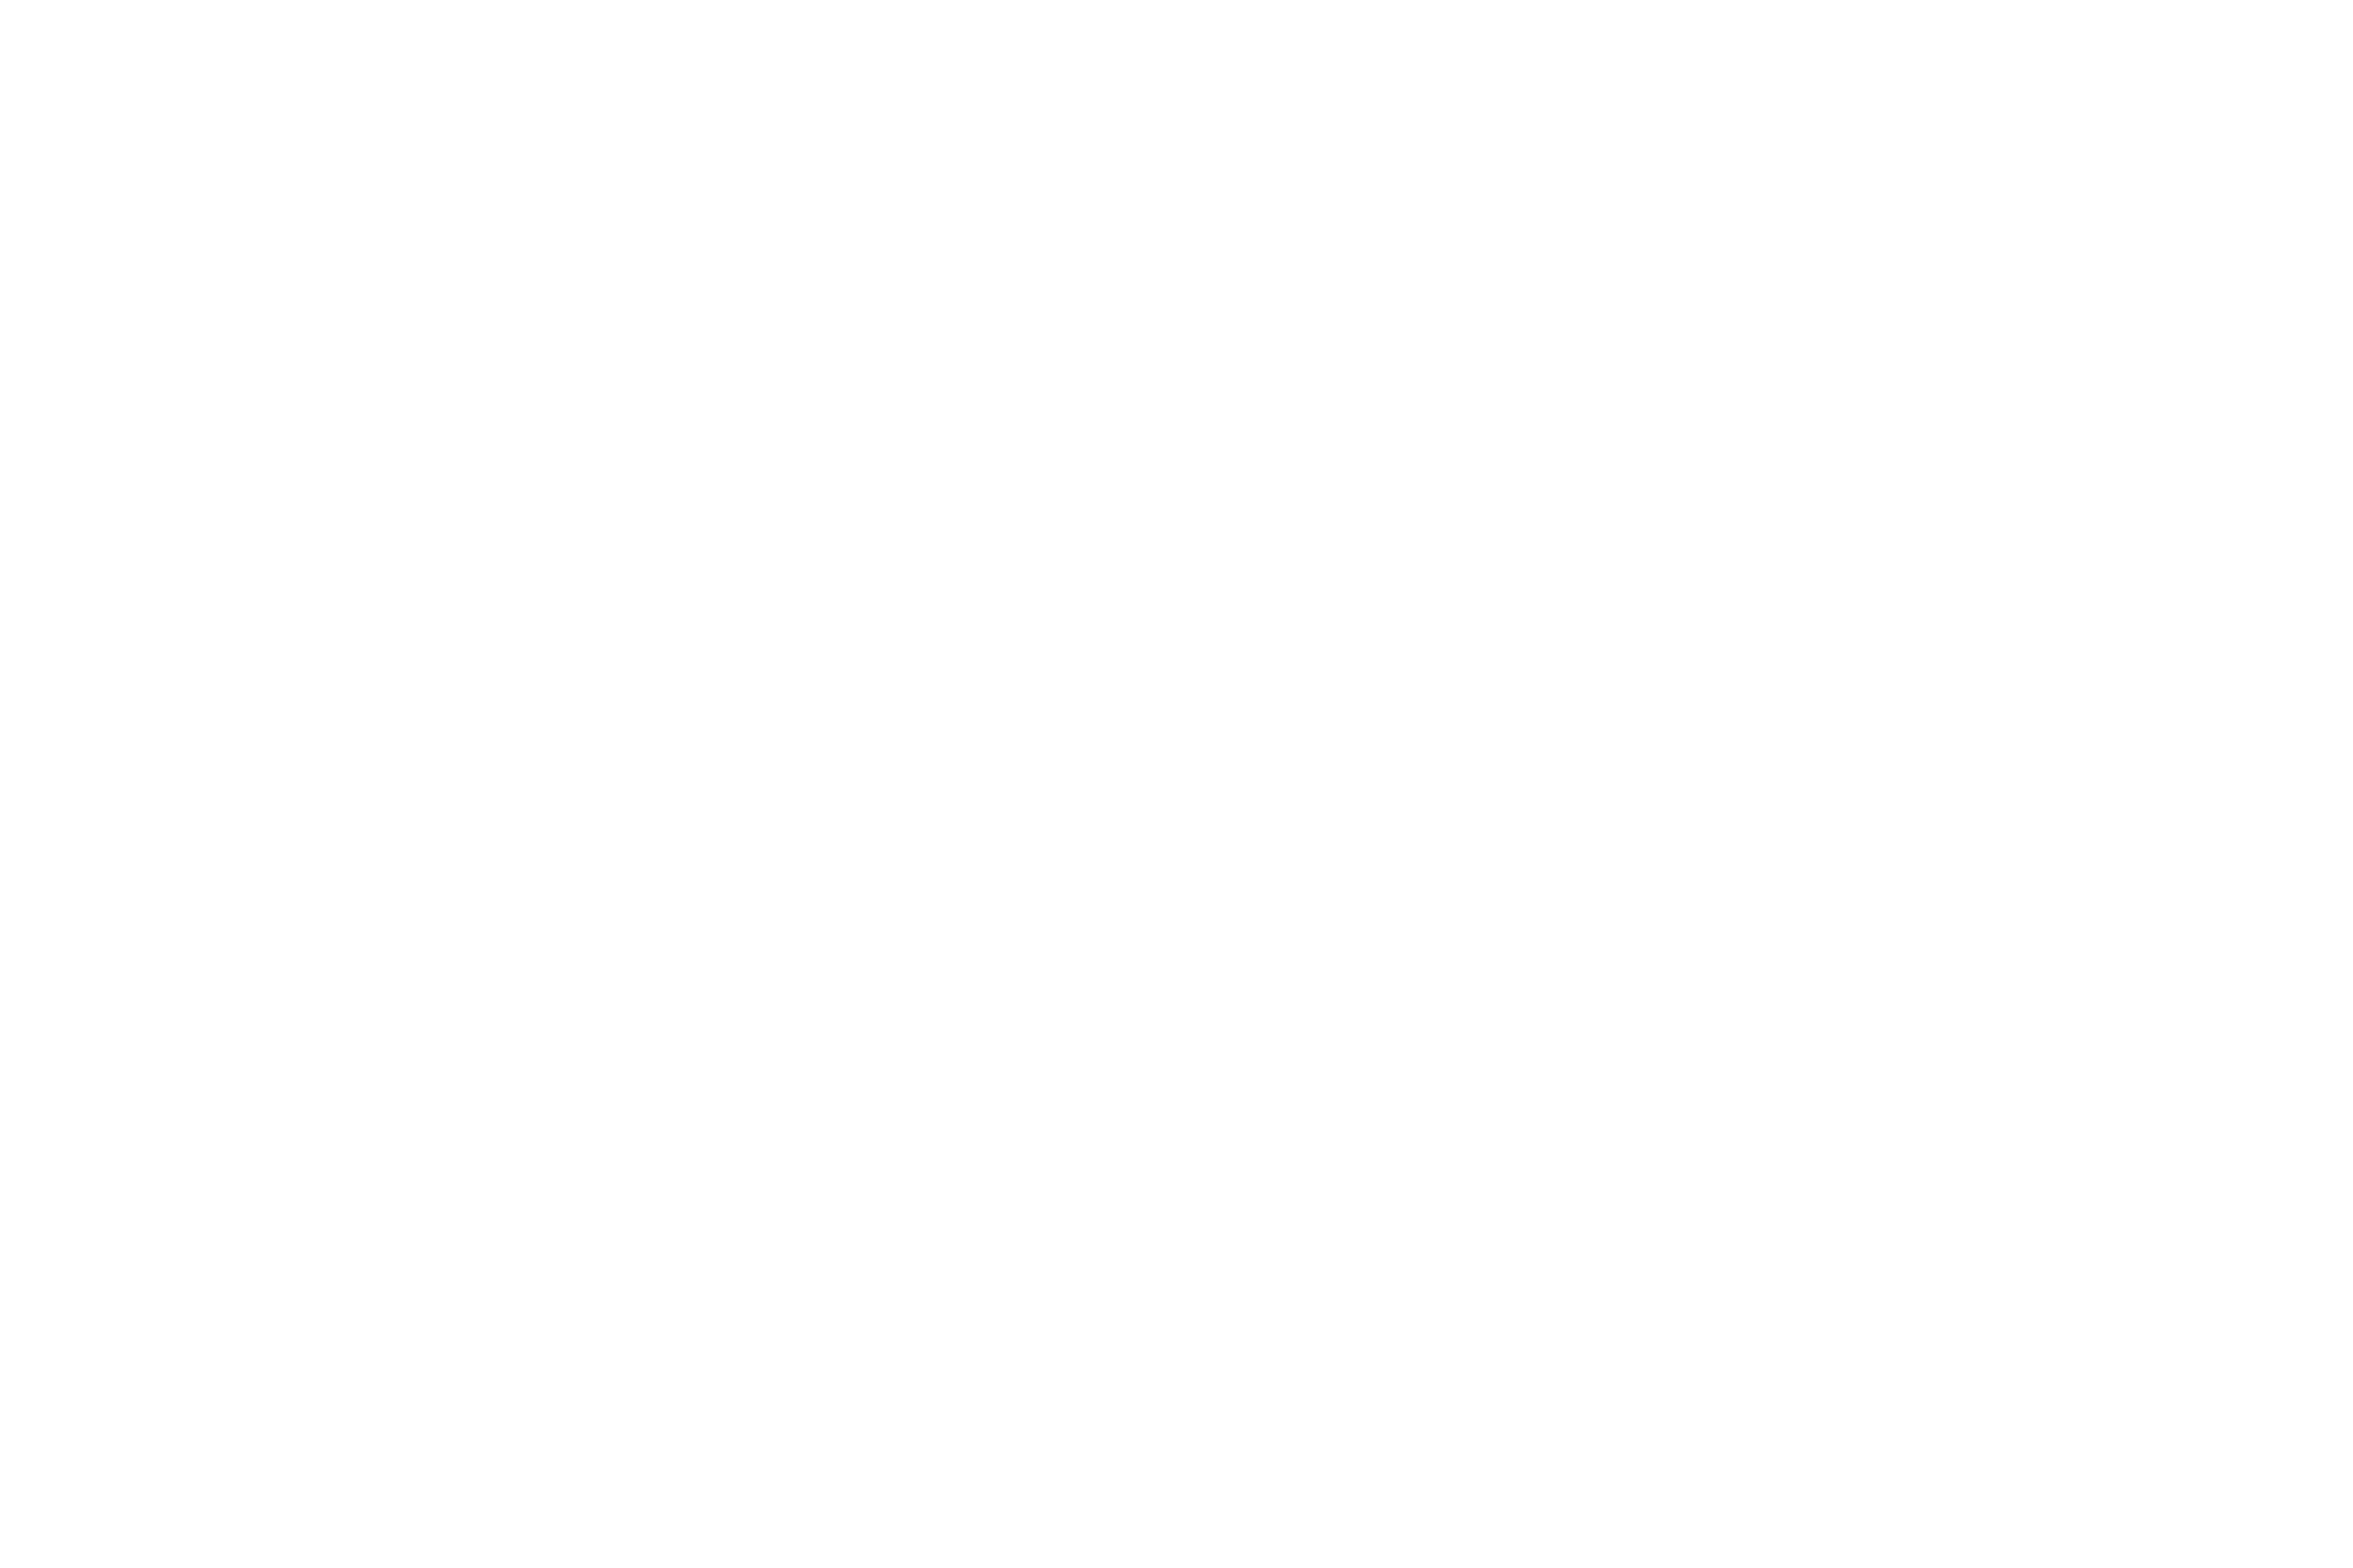 Hasselt Carnaval 2023 Logo